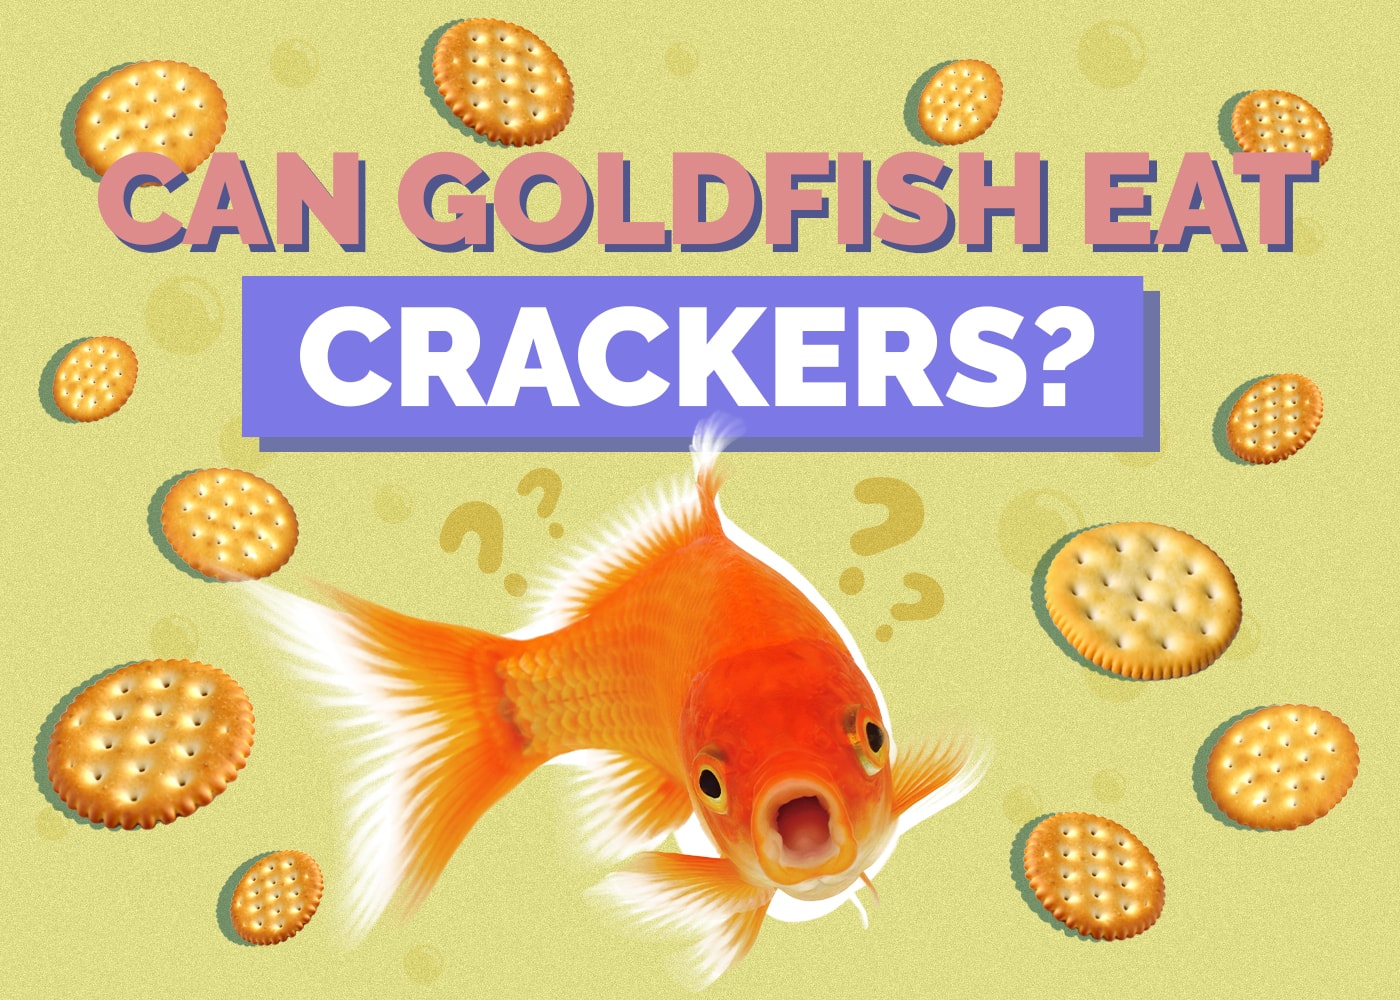 goldfish-crackers